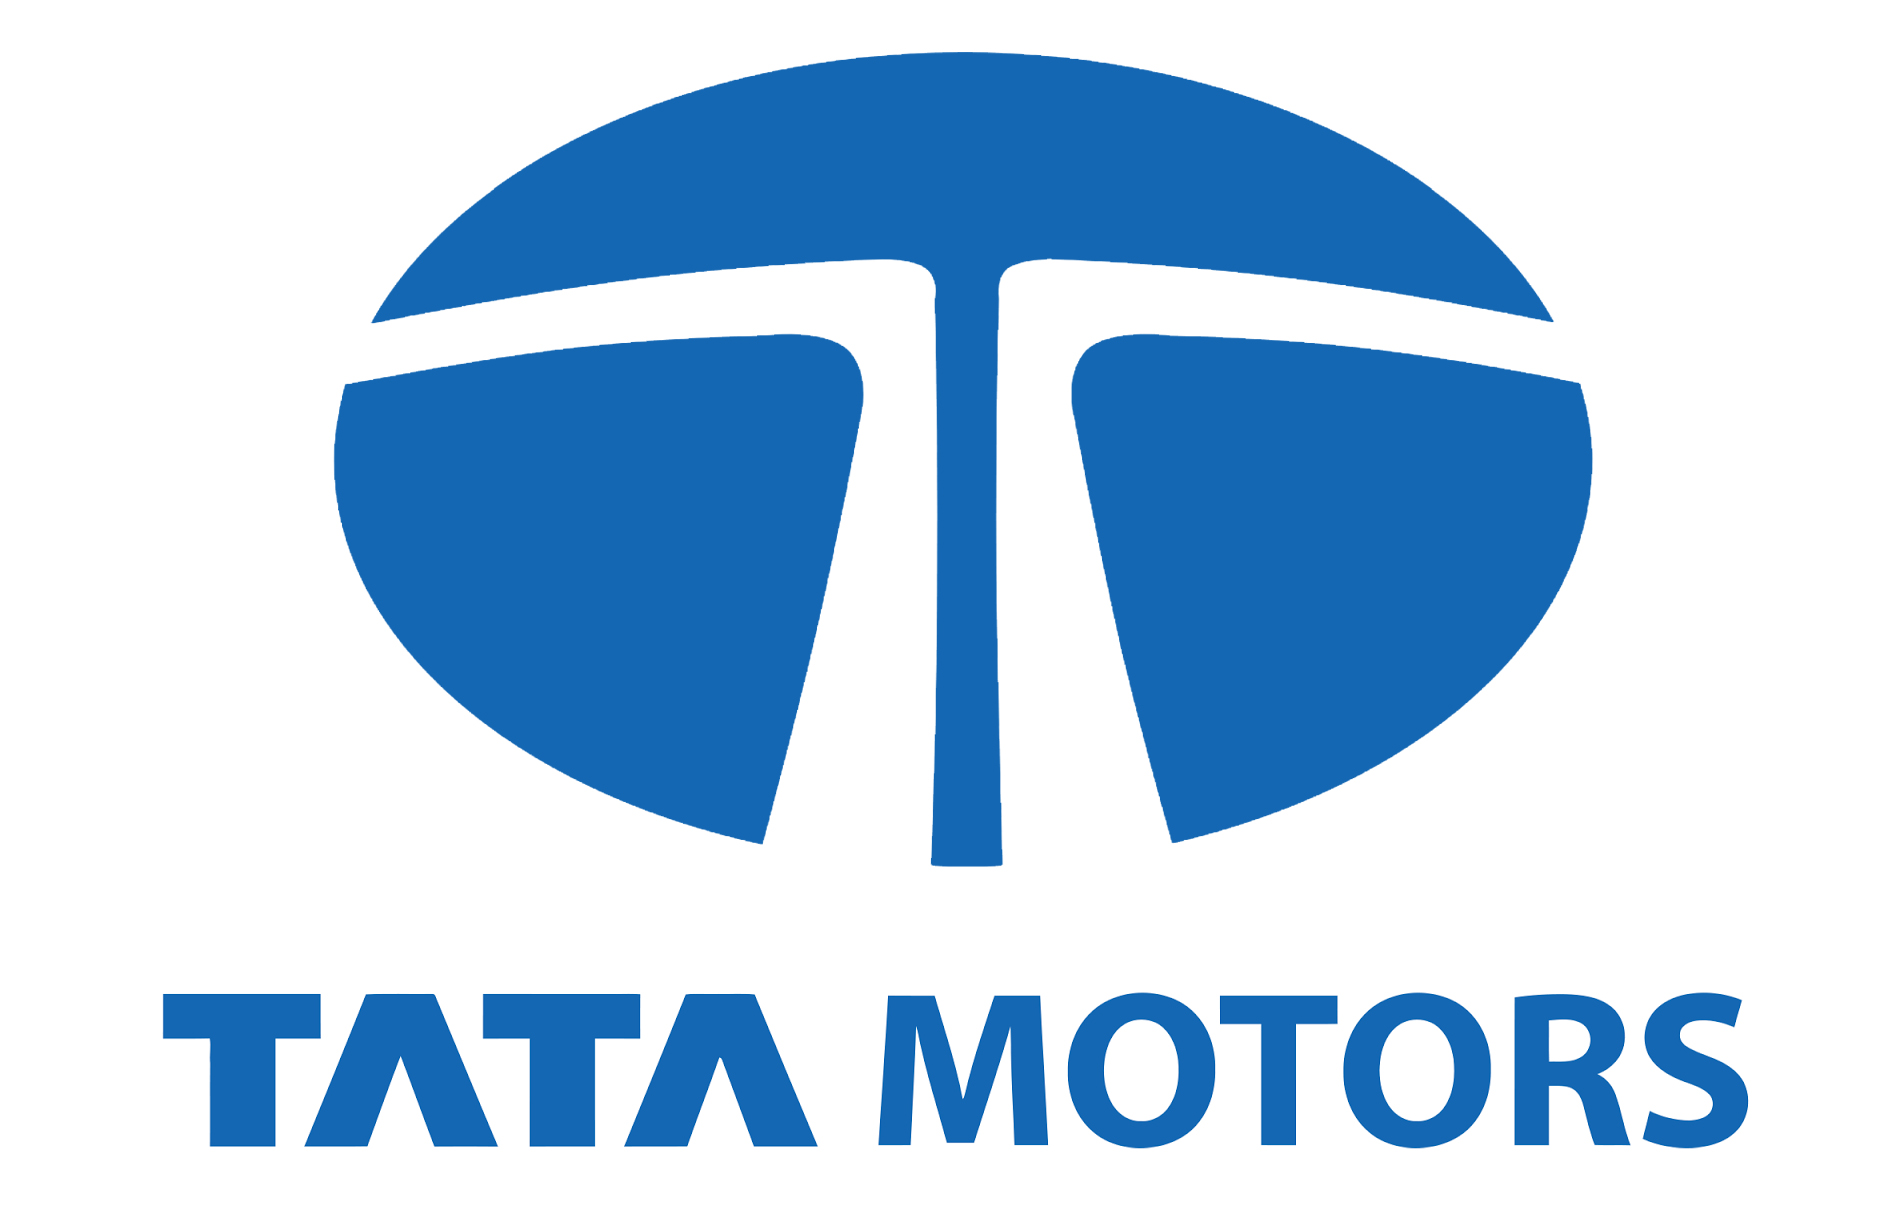 Tata Motors Cars Showroom - Puneet Cars|Show Room|Automotive